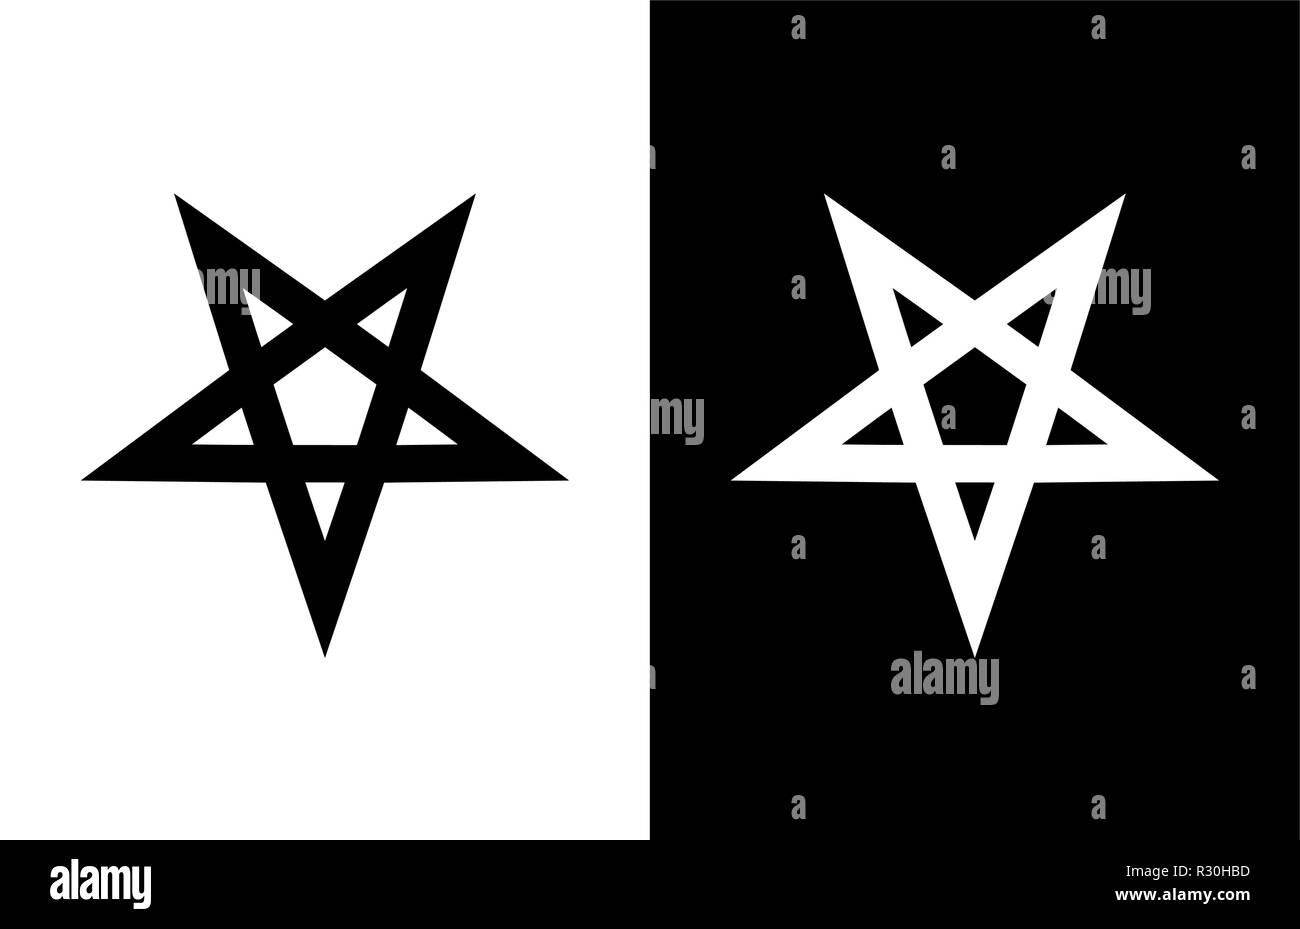 Vector emblem of Satan Pentagram Star on white and black background. Stock Vector